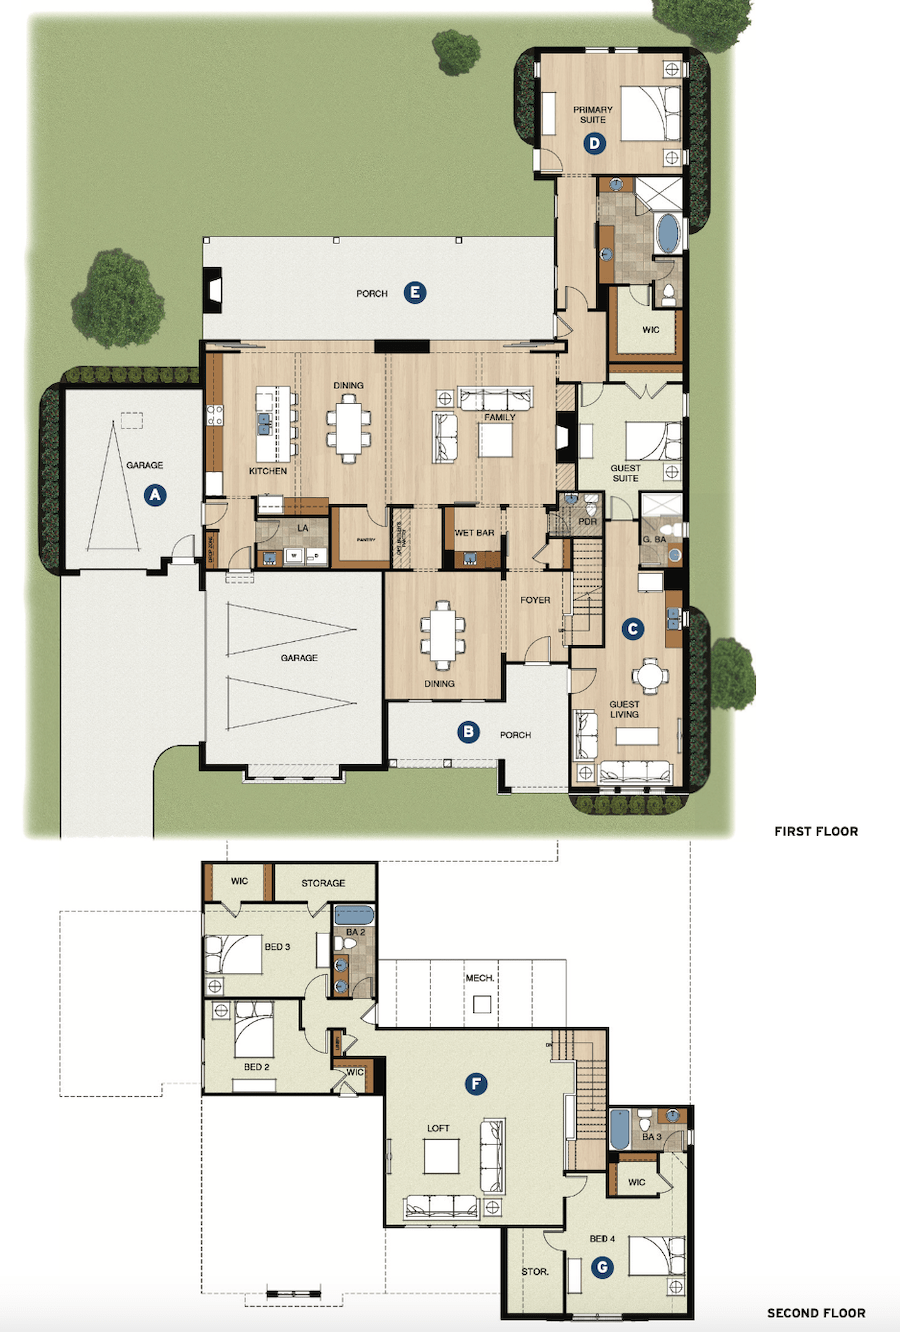 Floor plans for multi-gen home design by GMD Design Group